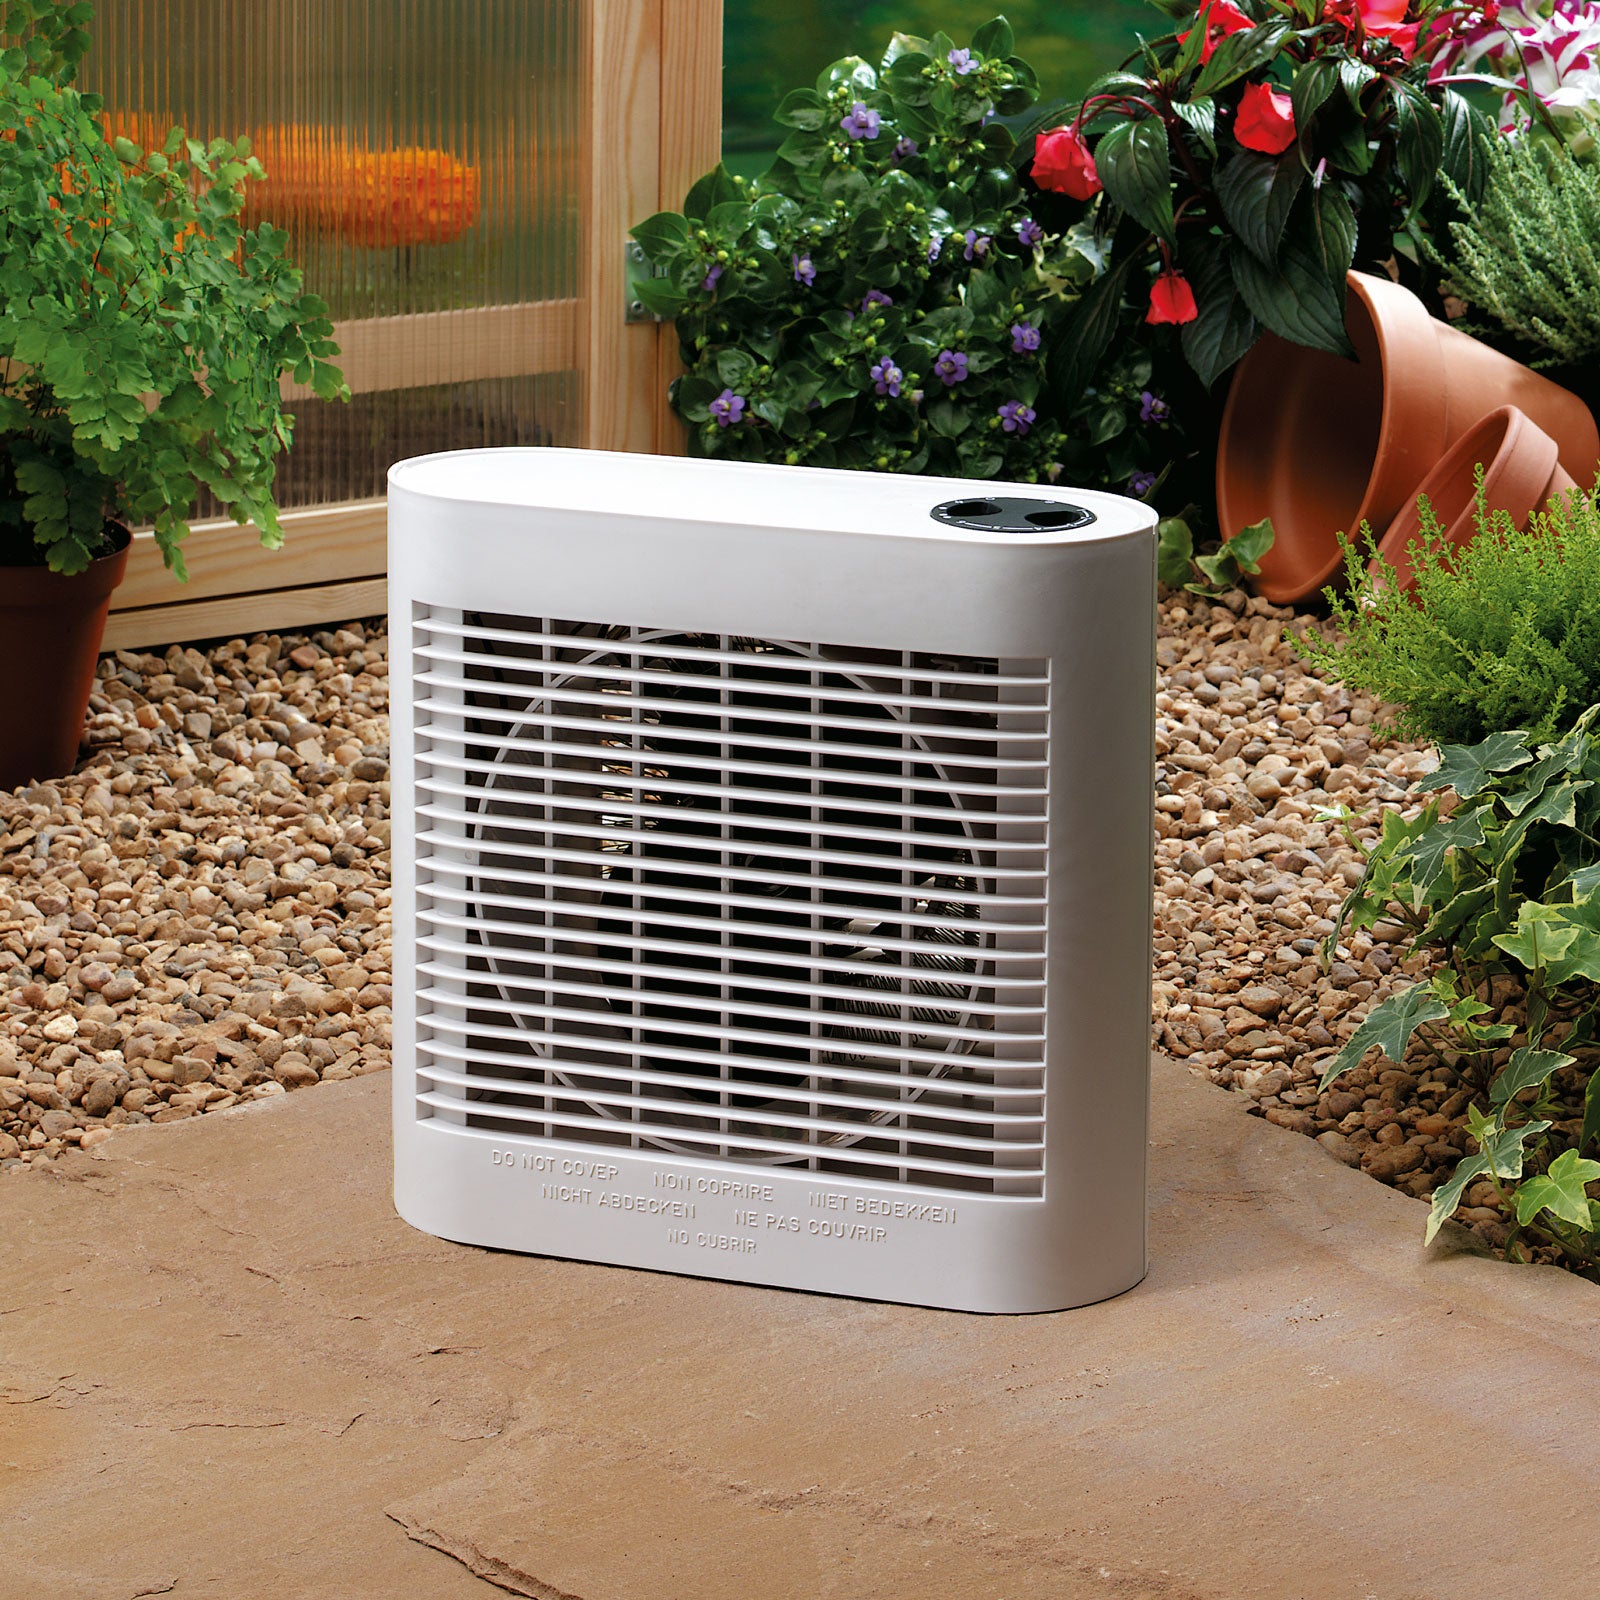 Sunshine Gardenhouse Greenhouse Heating Thermostat & Reviews - Wayfair